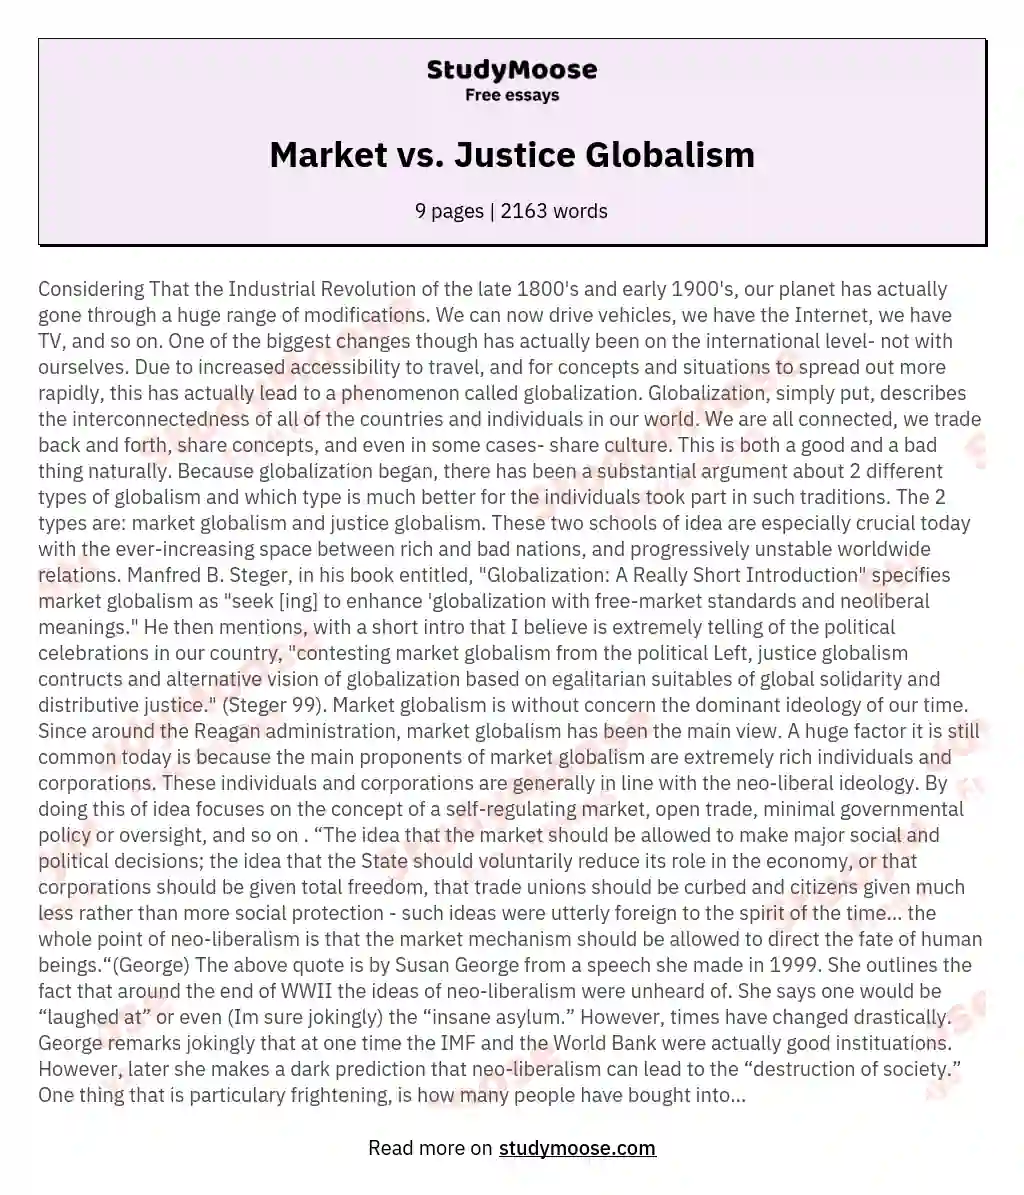 Market vs. Justice Globalism essay